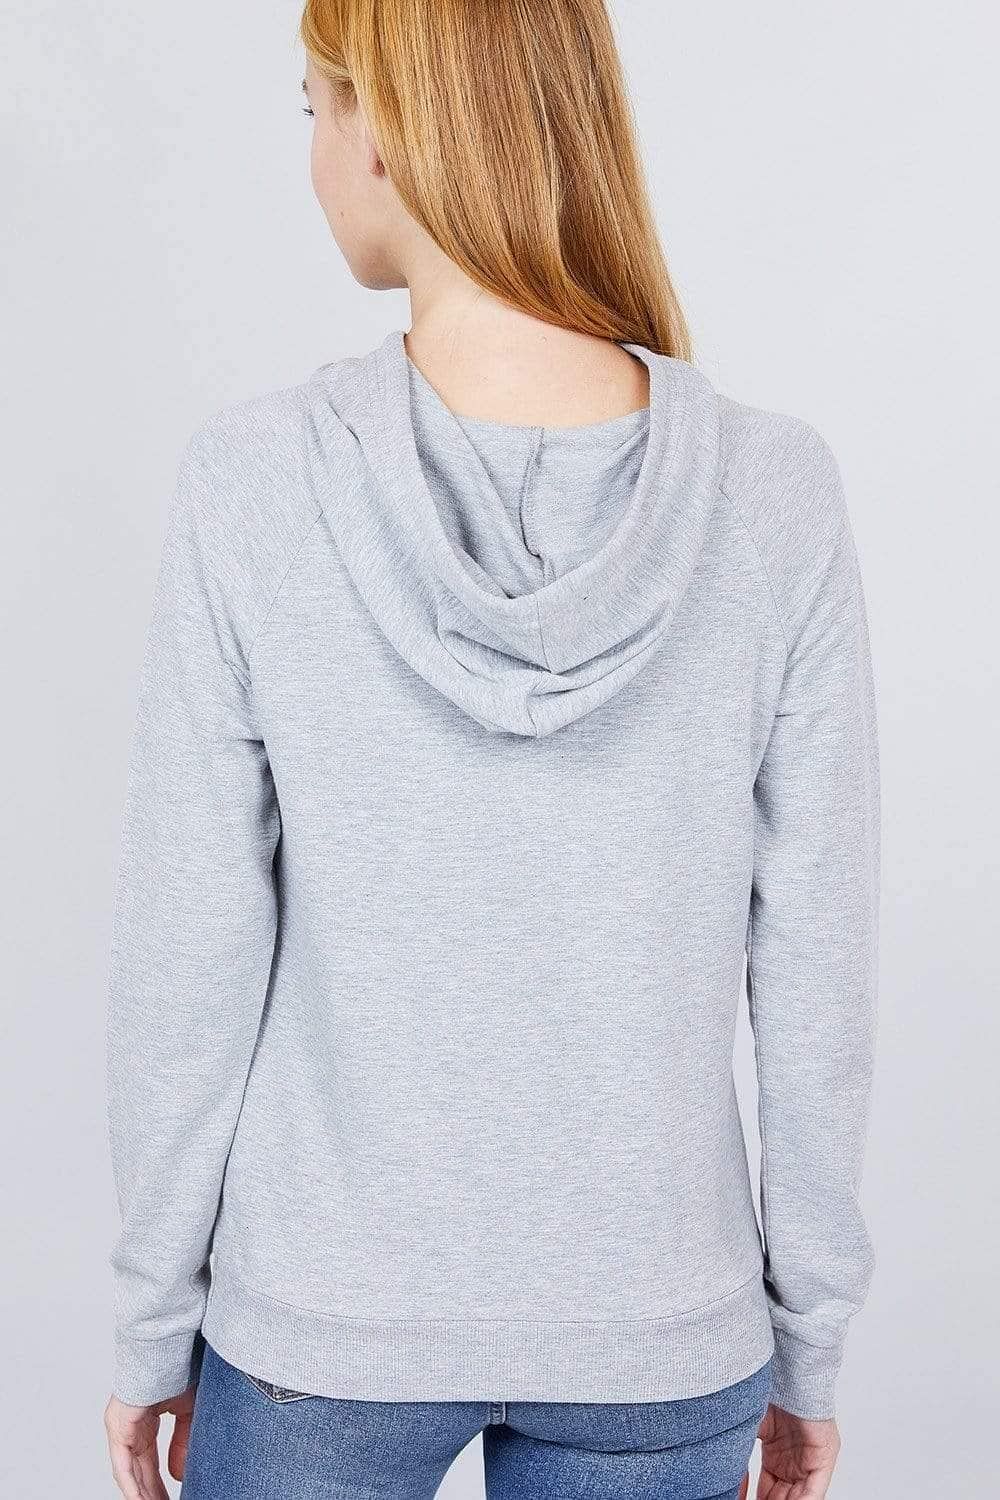 Heather Gray French Terry Long Sleeve Sweatshirt - Shopping Therapy Sweatshirt